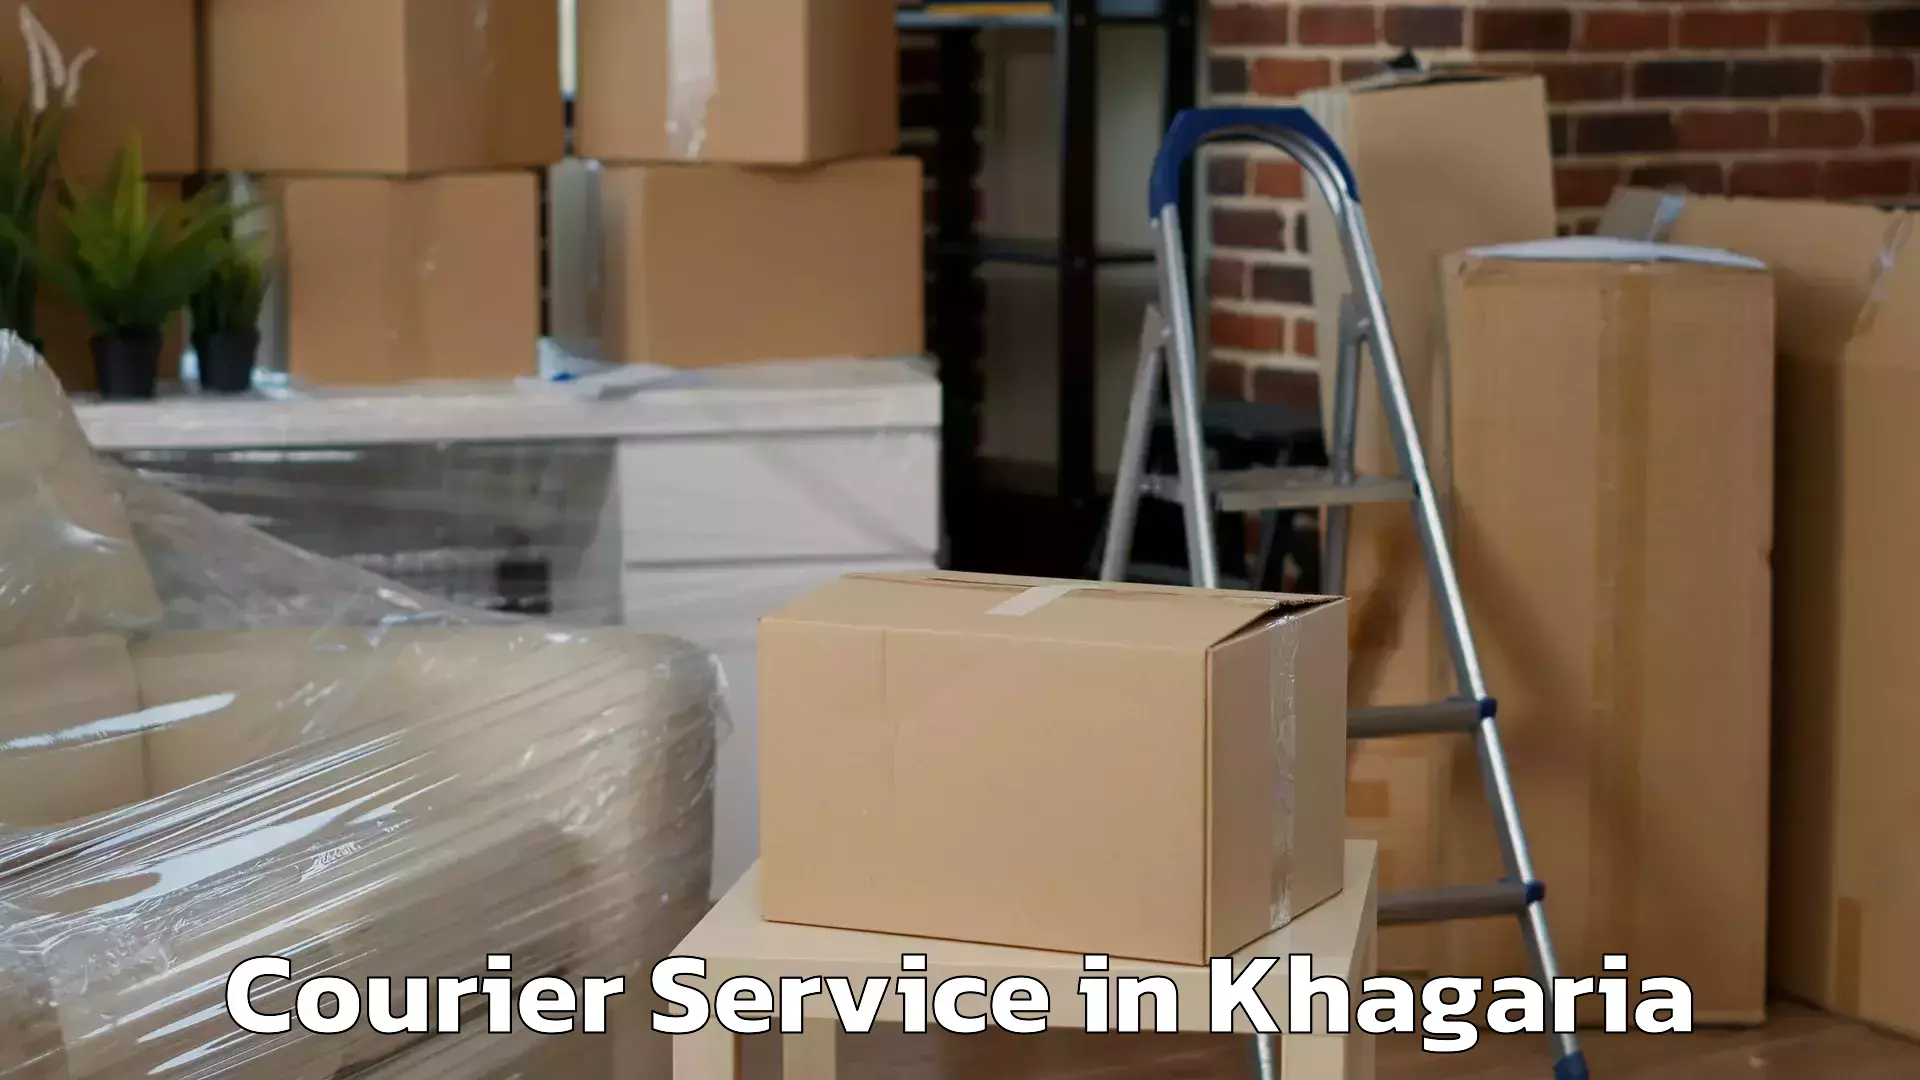 Multi-service courier options in Khagaria